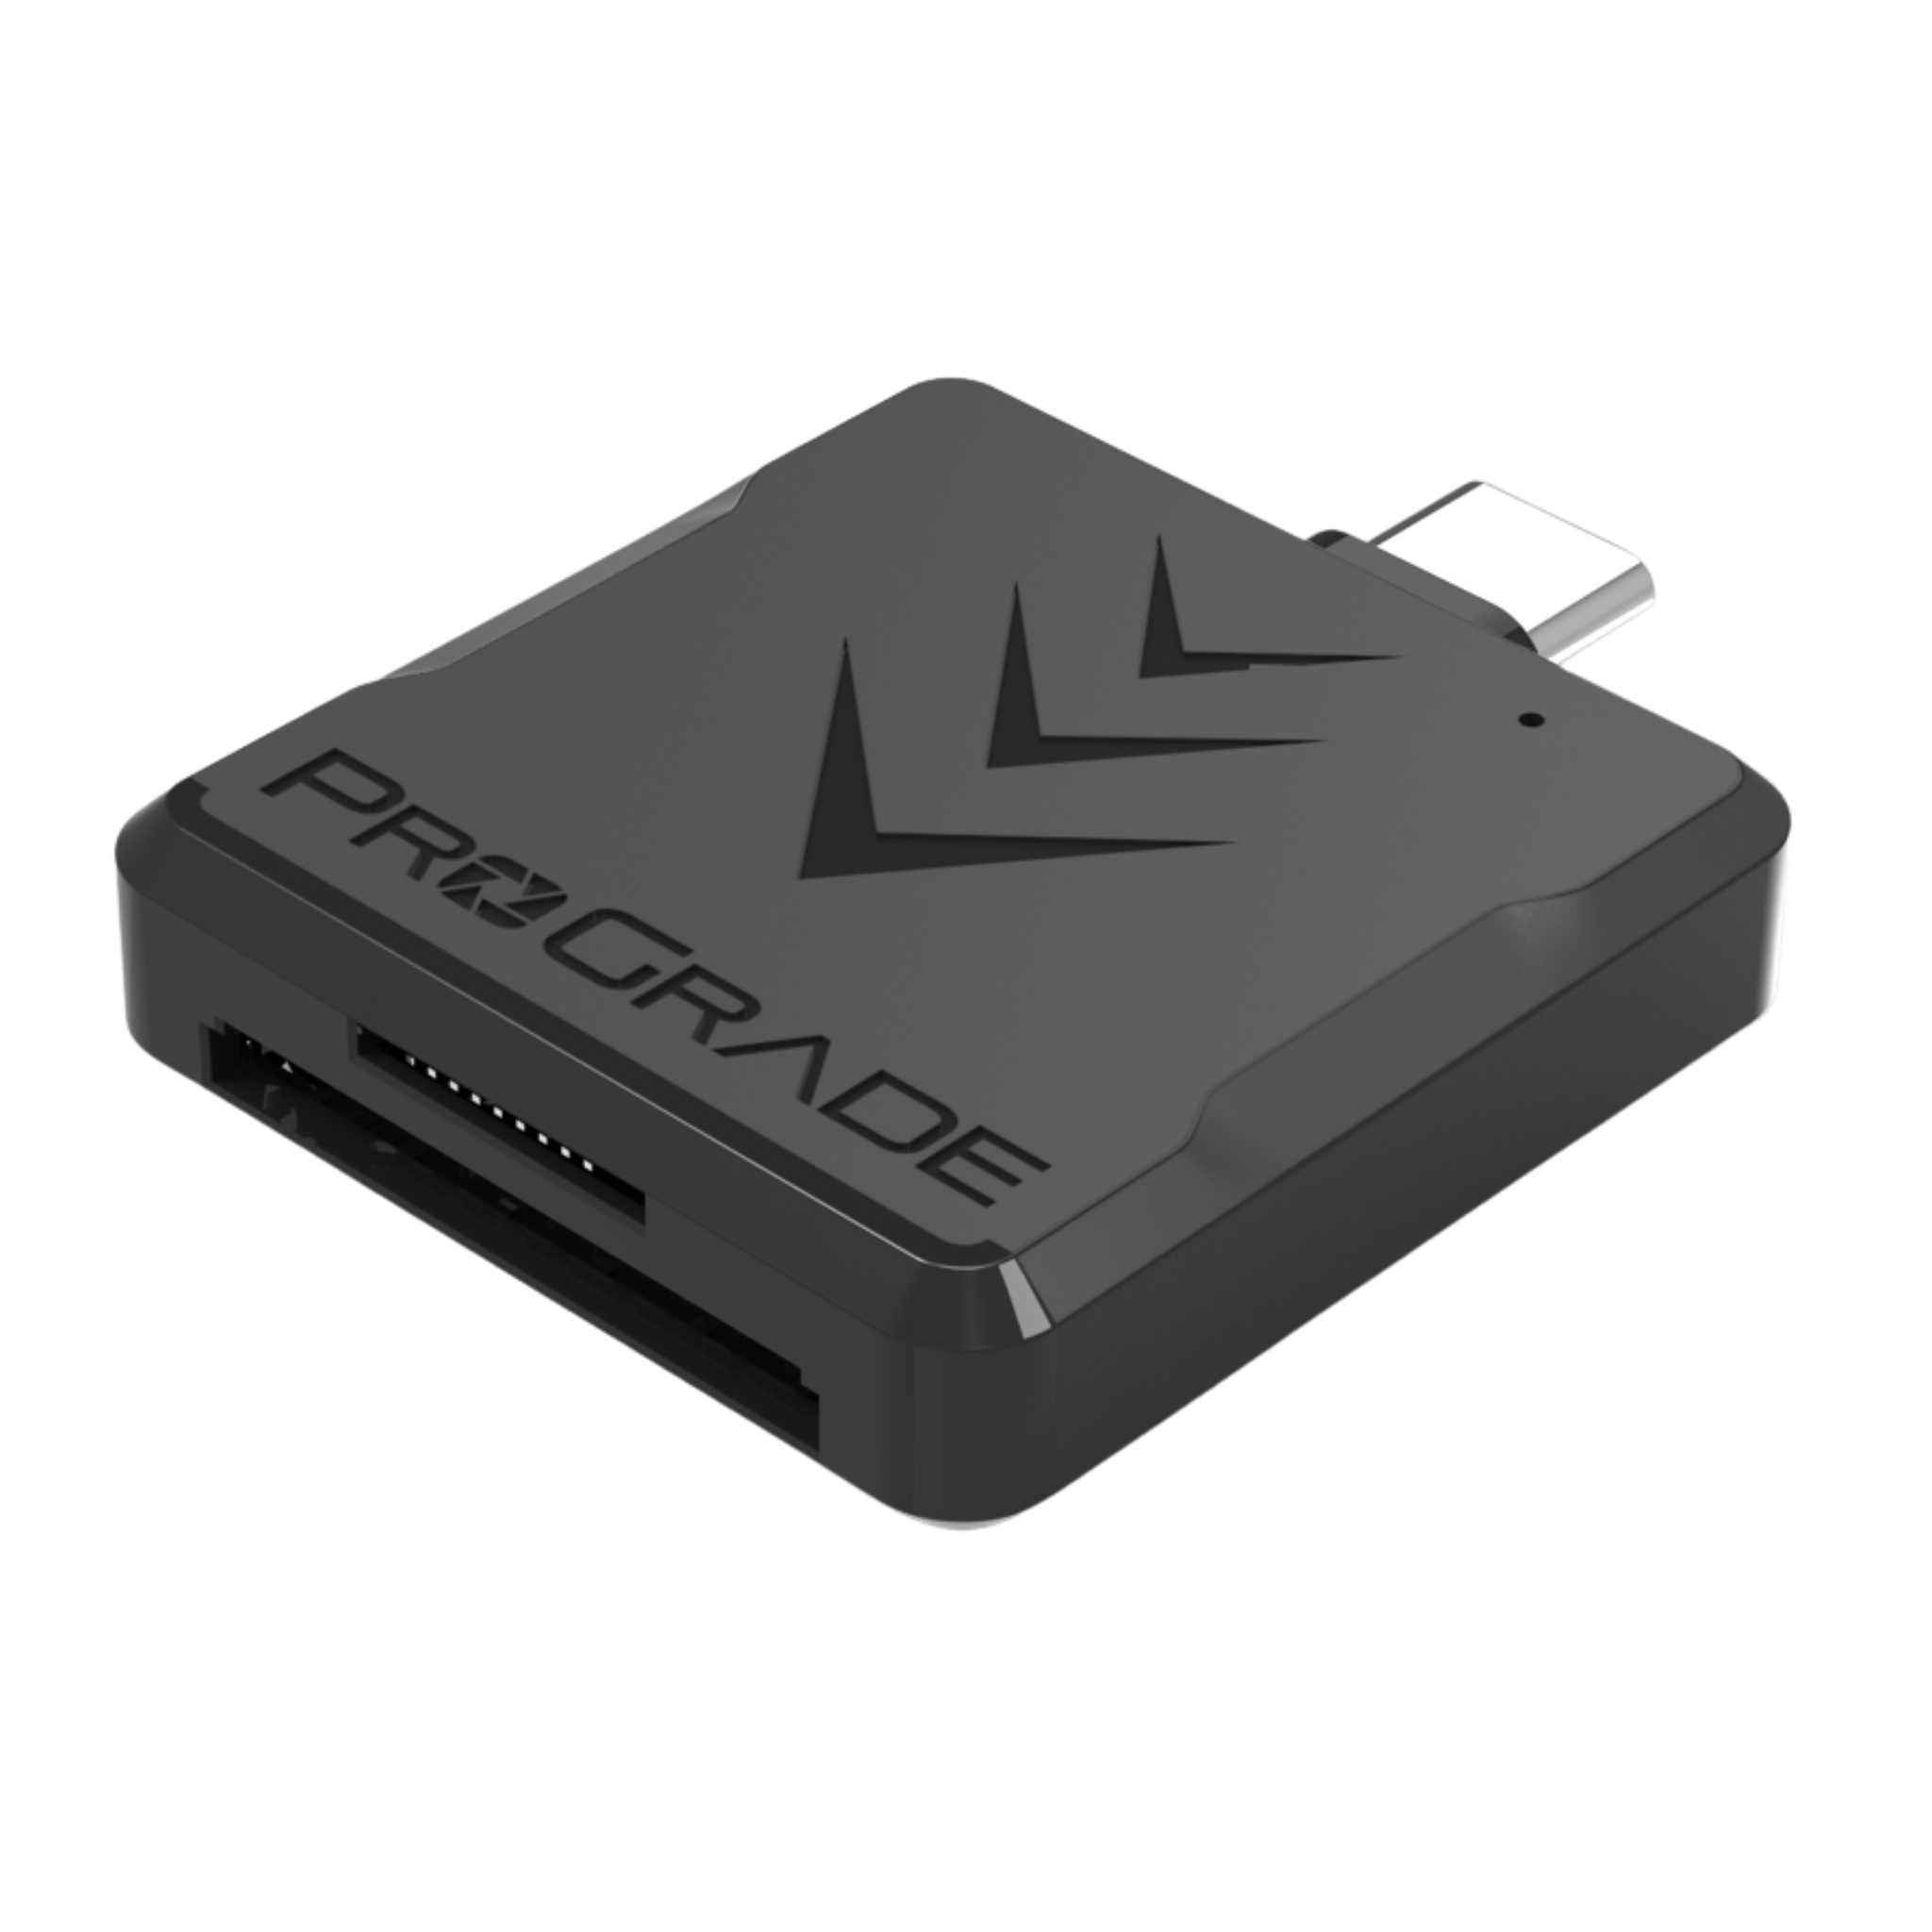 SDXC & MicroSD Mobile Memory Card Reader